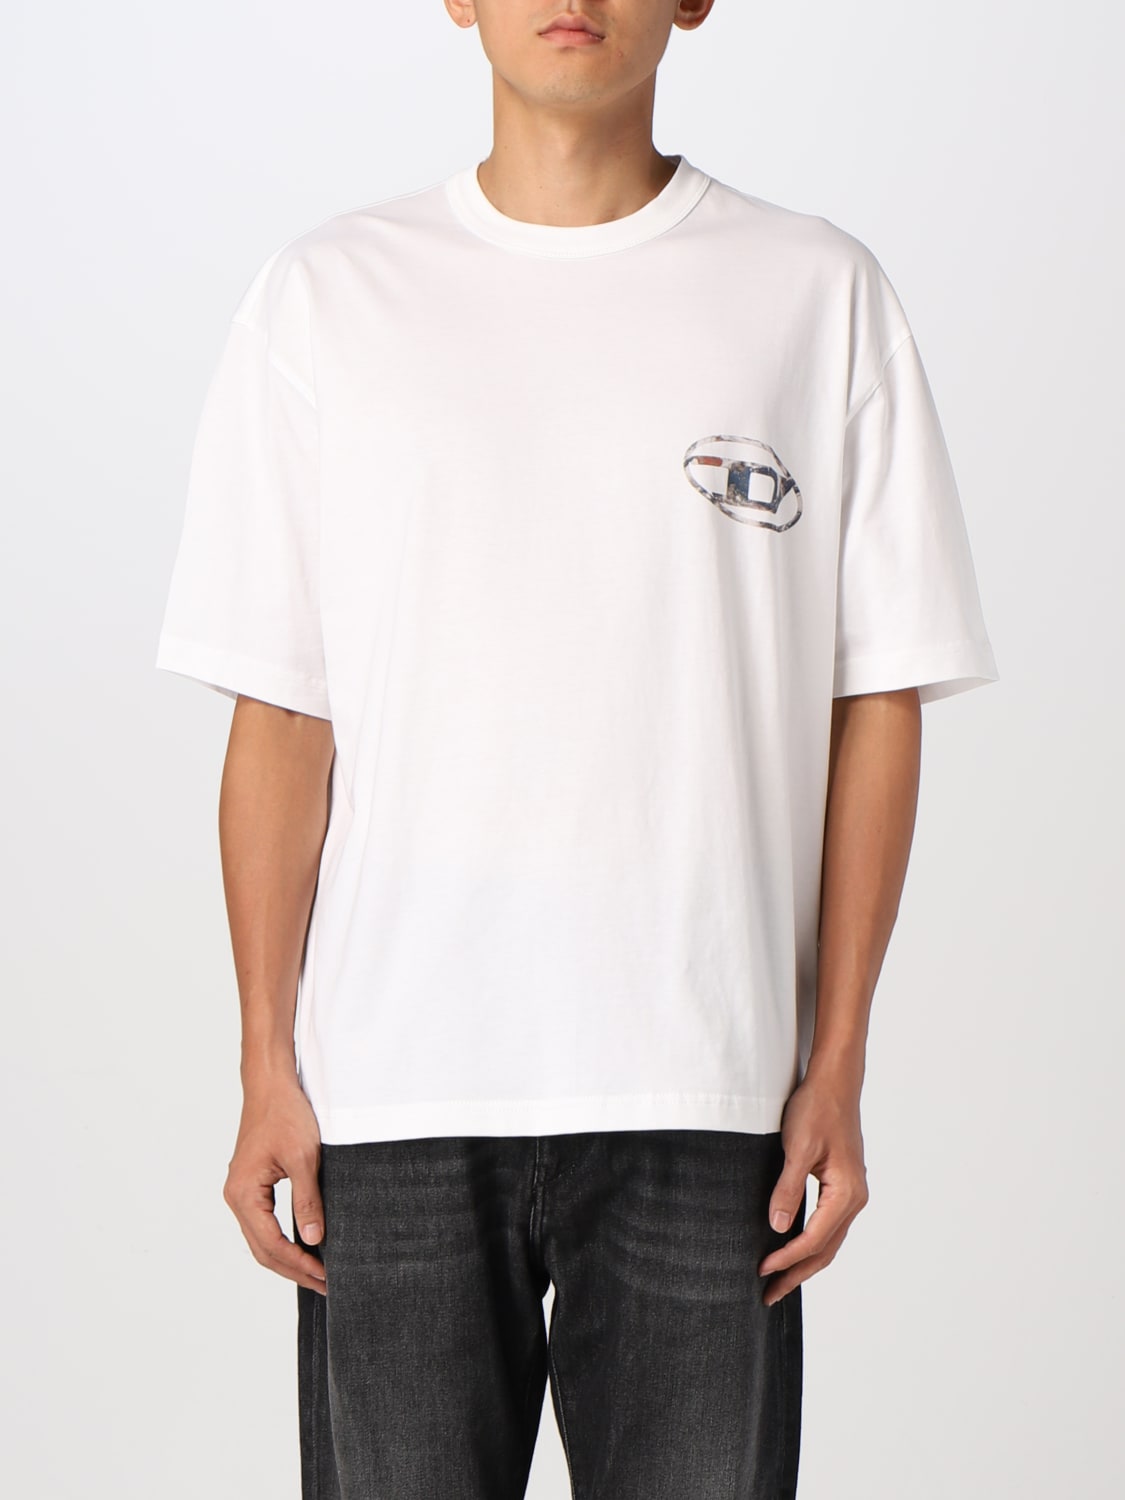 DIESEL: cotton T-shirt with Planet print - White | Diesel t